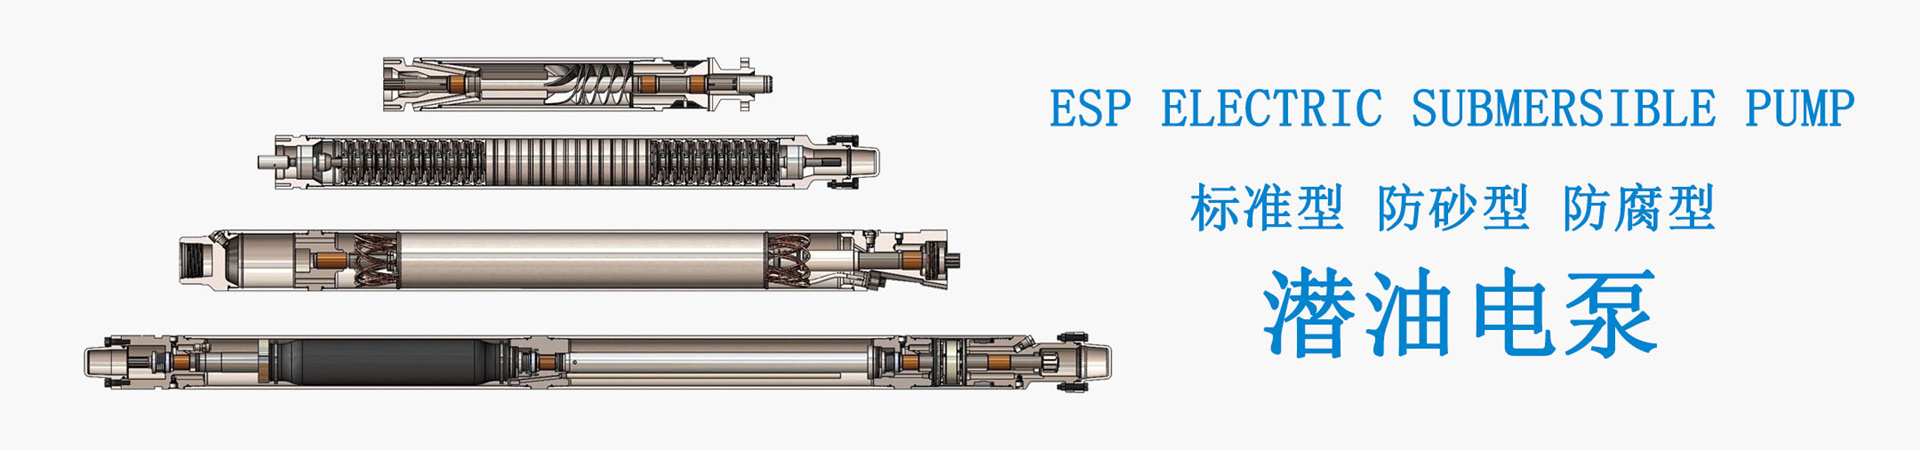 ATESP-潛油電泵-系列